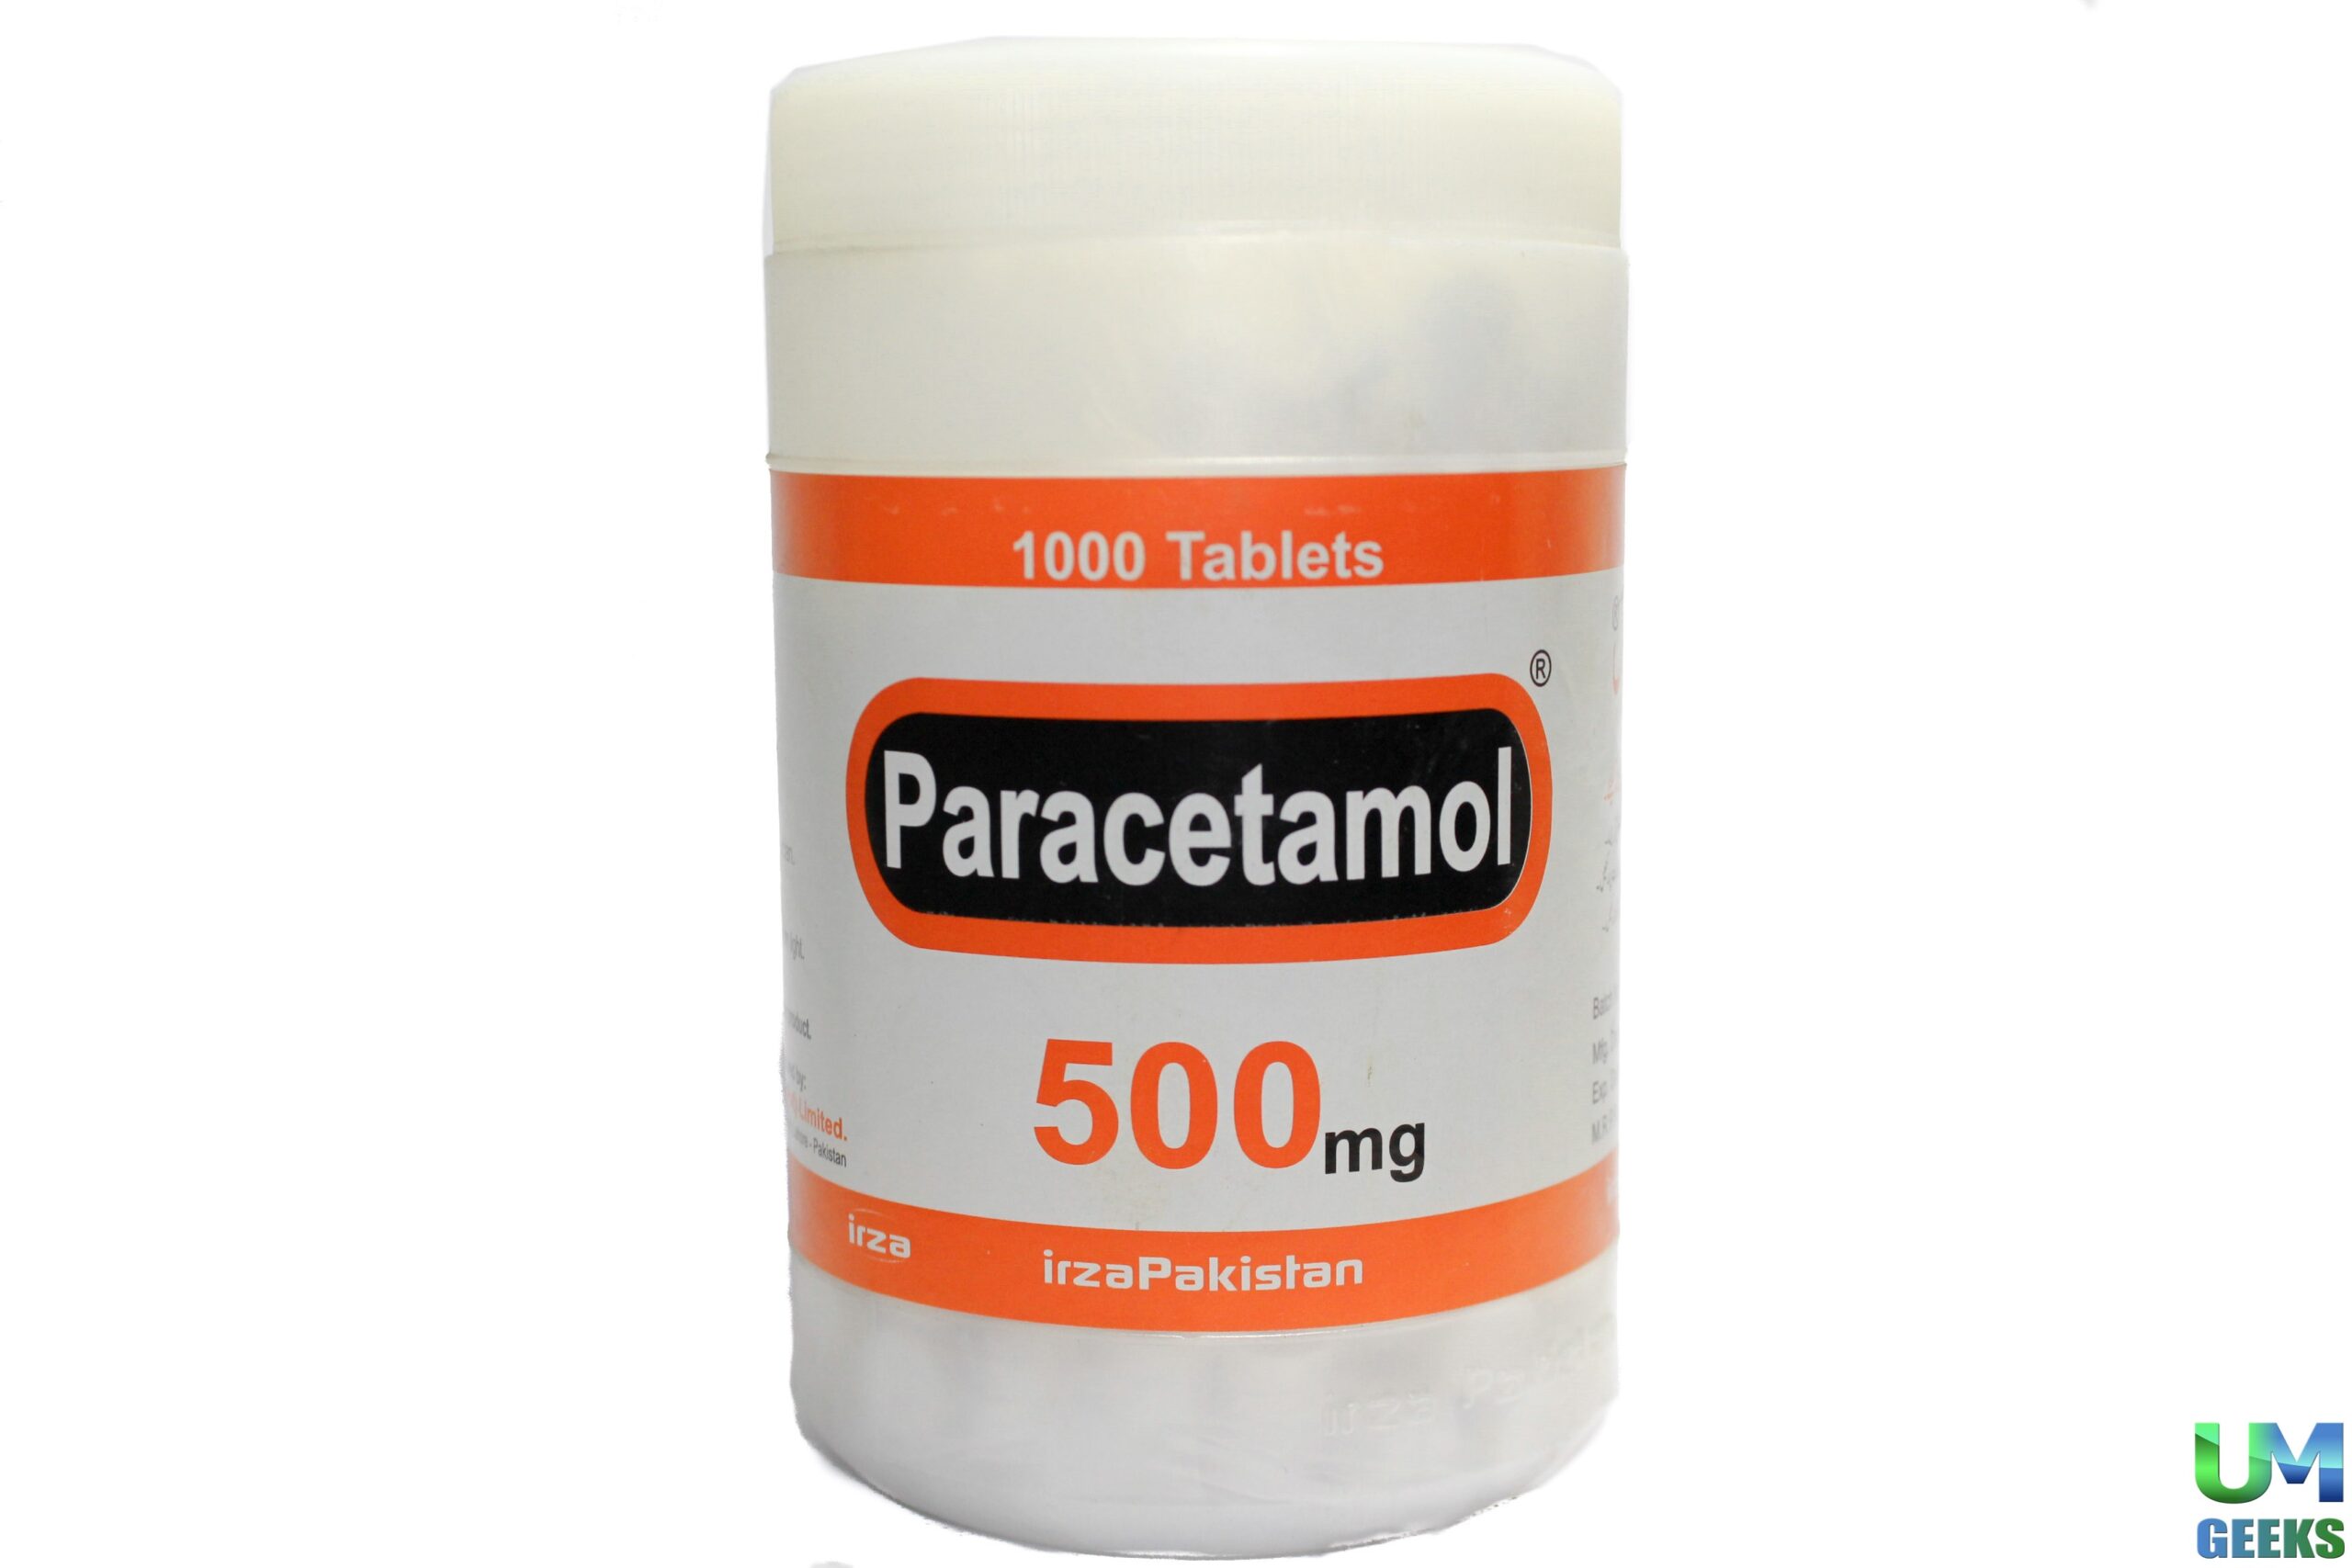 Paracetamol: Painkiller raises blood pressure?